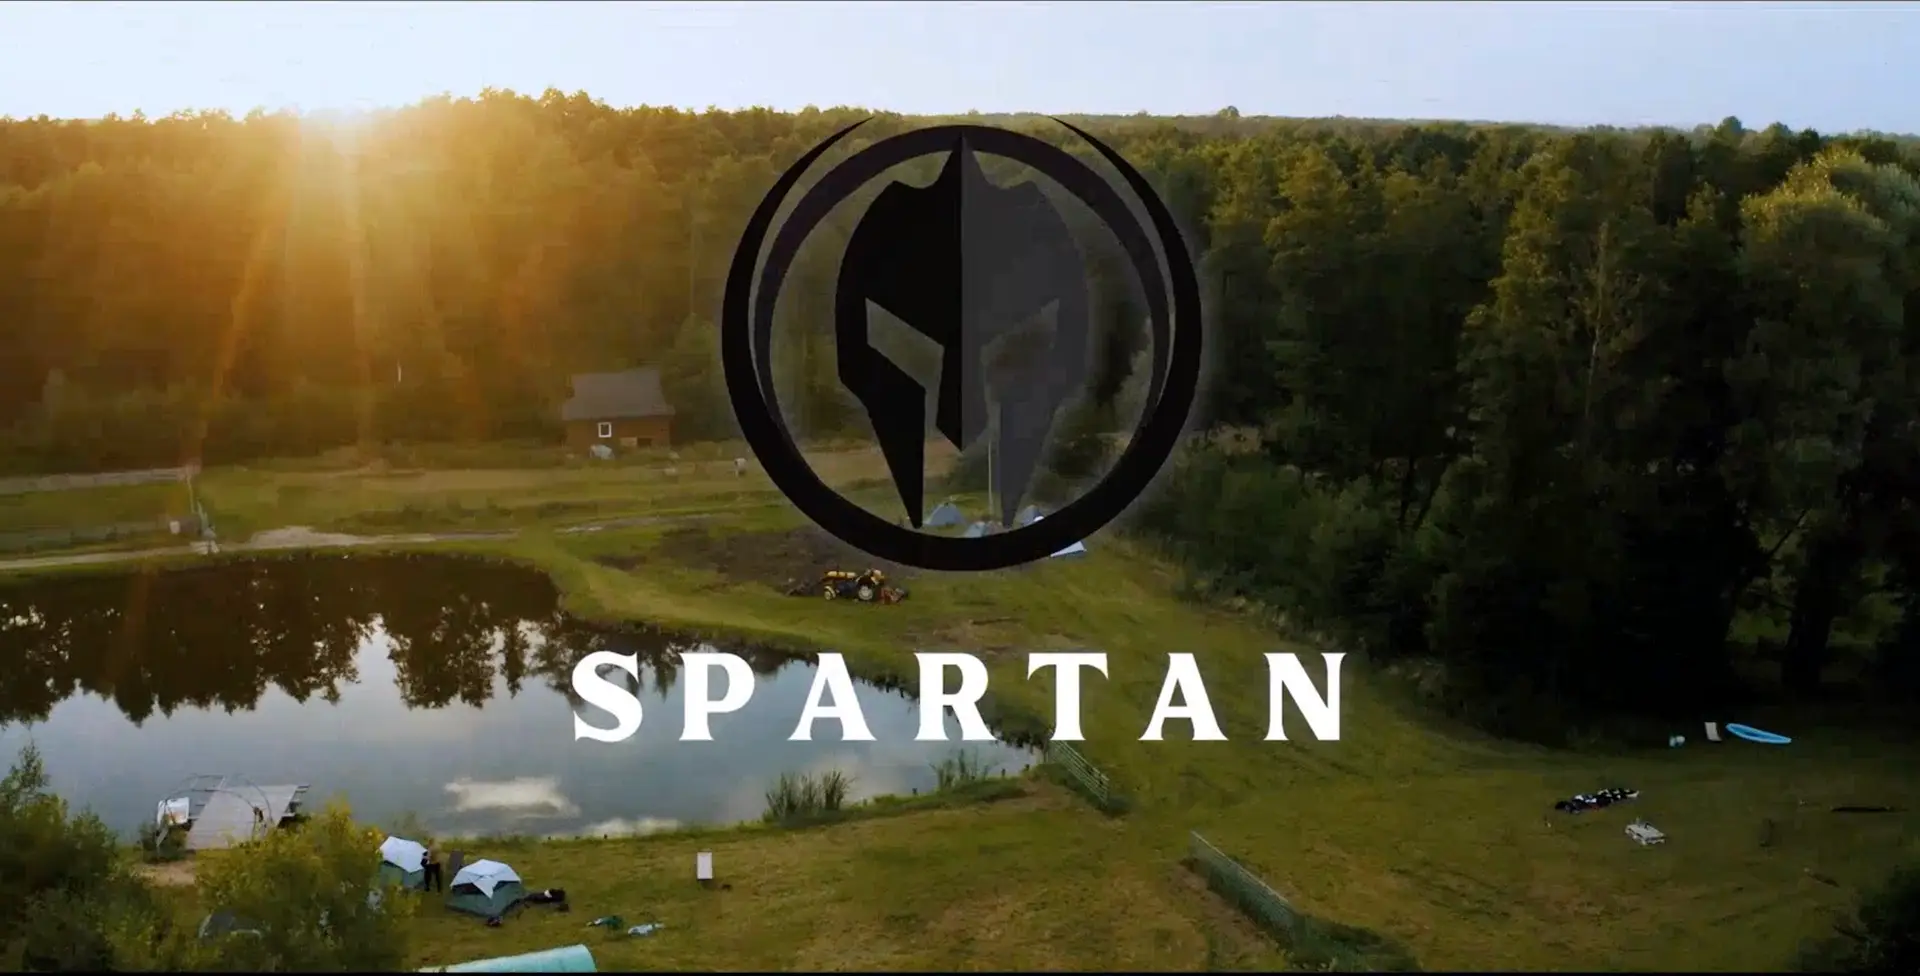 Spartan Camp Event Video